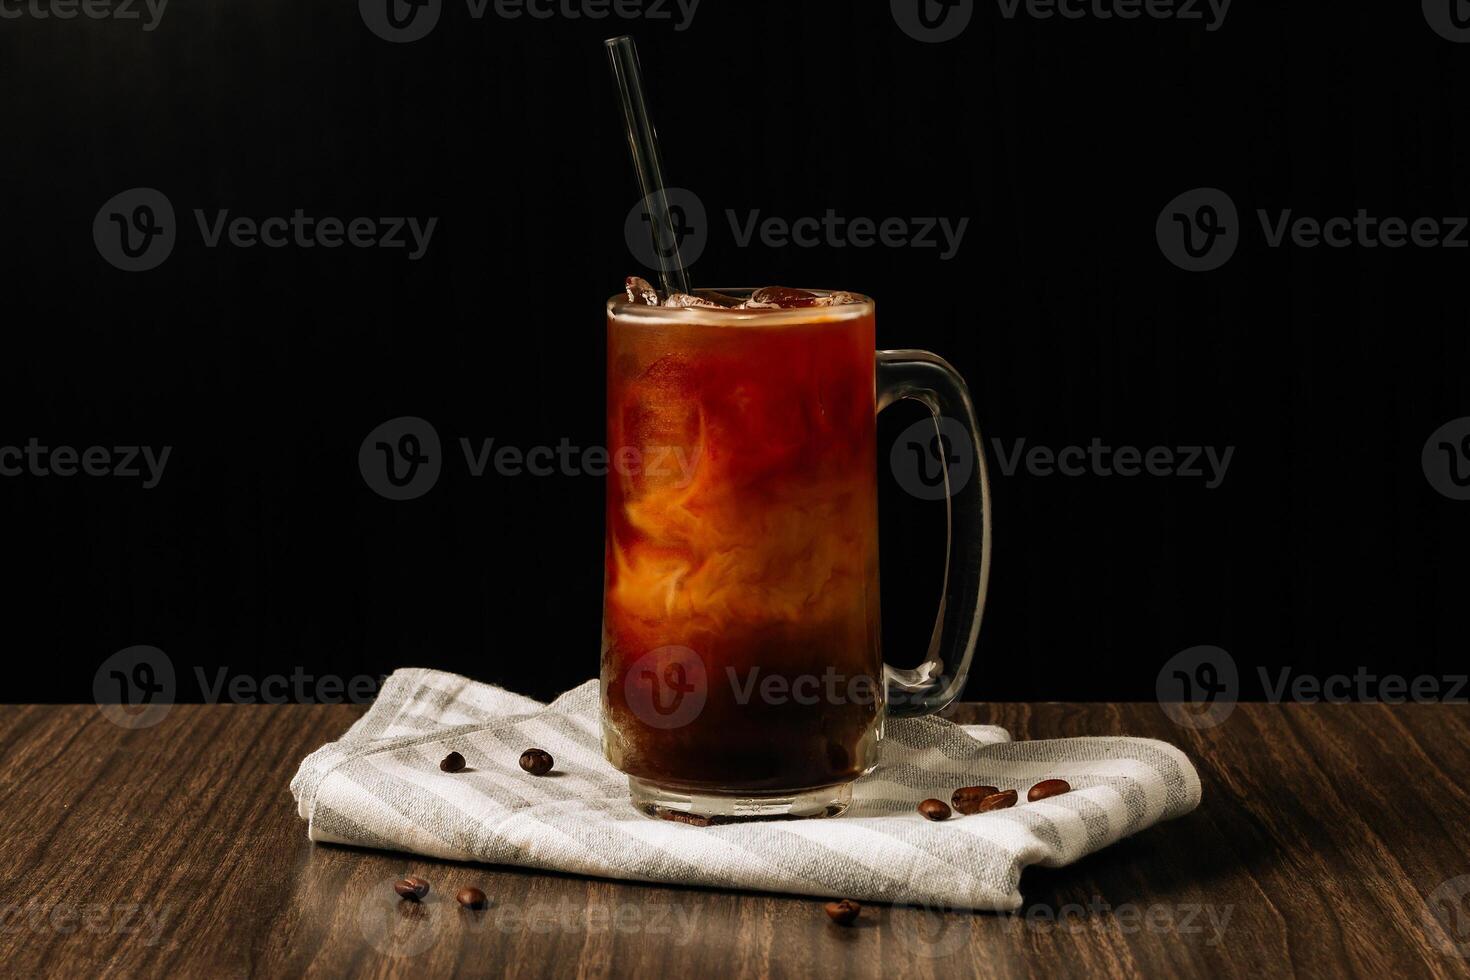 con hielo café en un alto vaso y café frijoles, oscuro hormigón mesa frío verano bebida terminado oscuro de madera antecedentes. foto